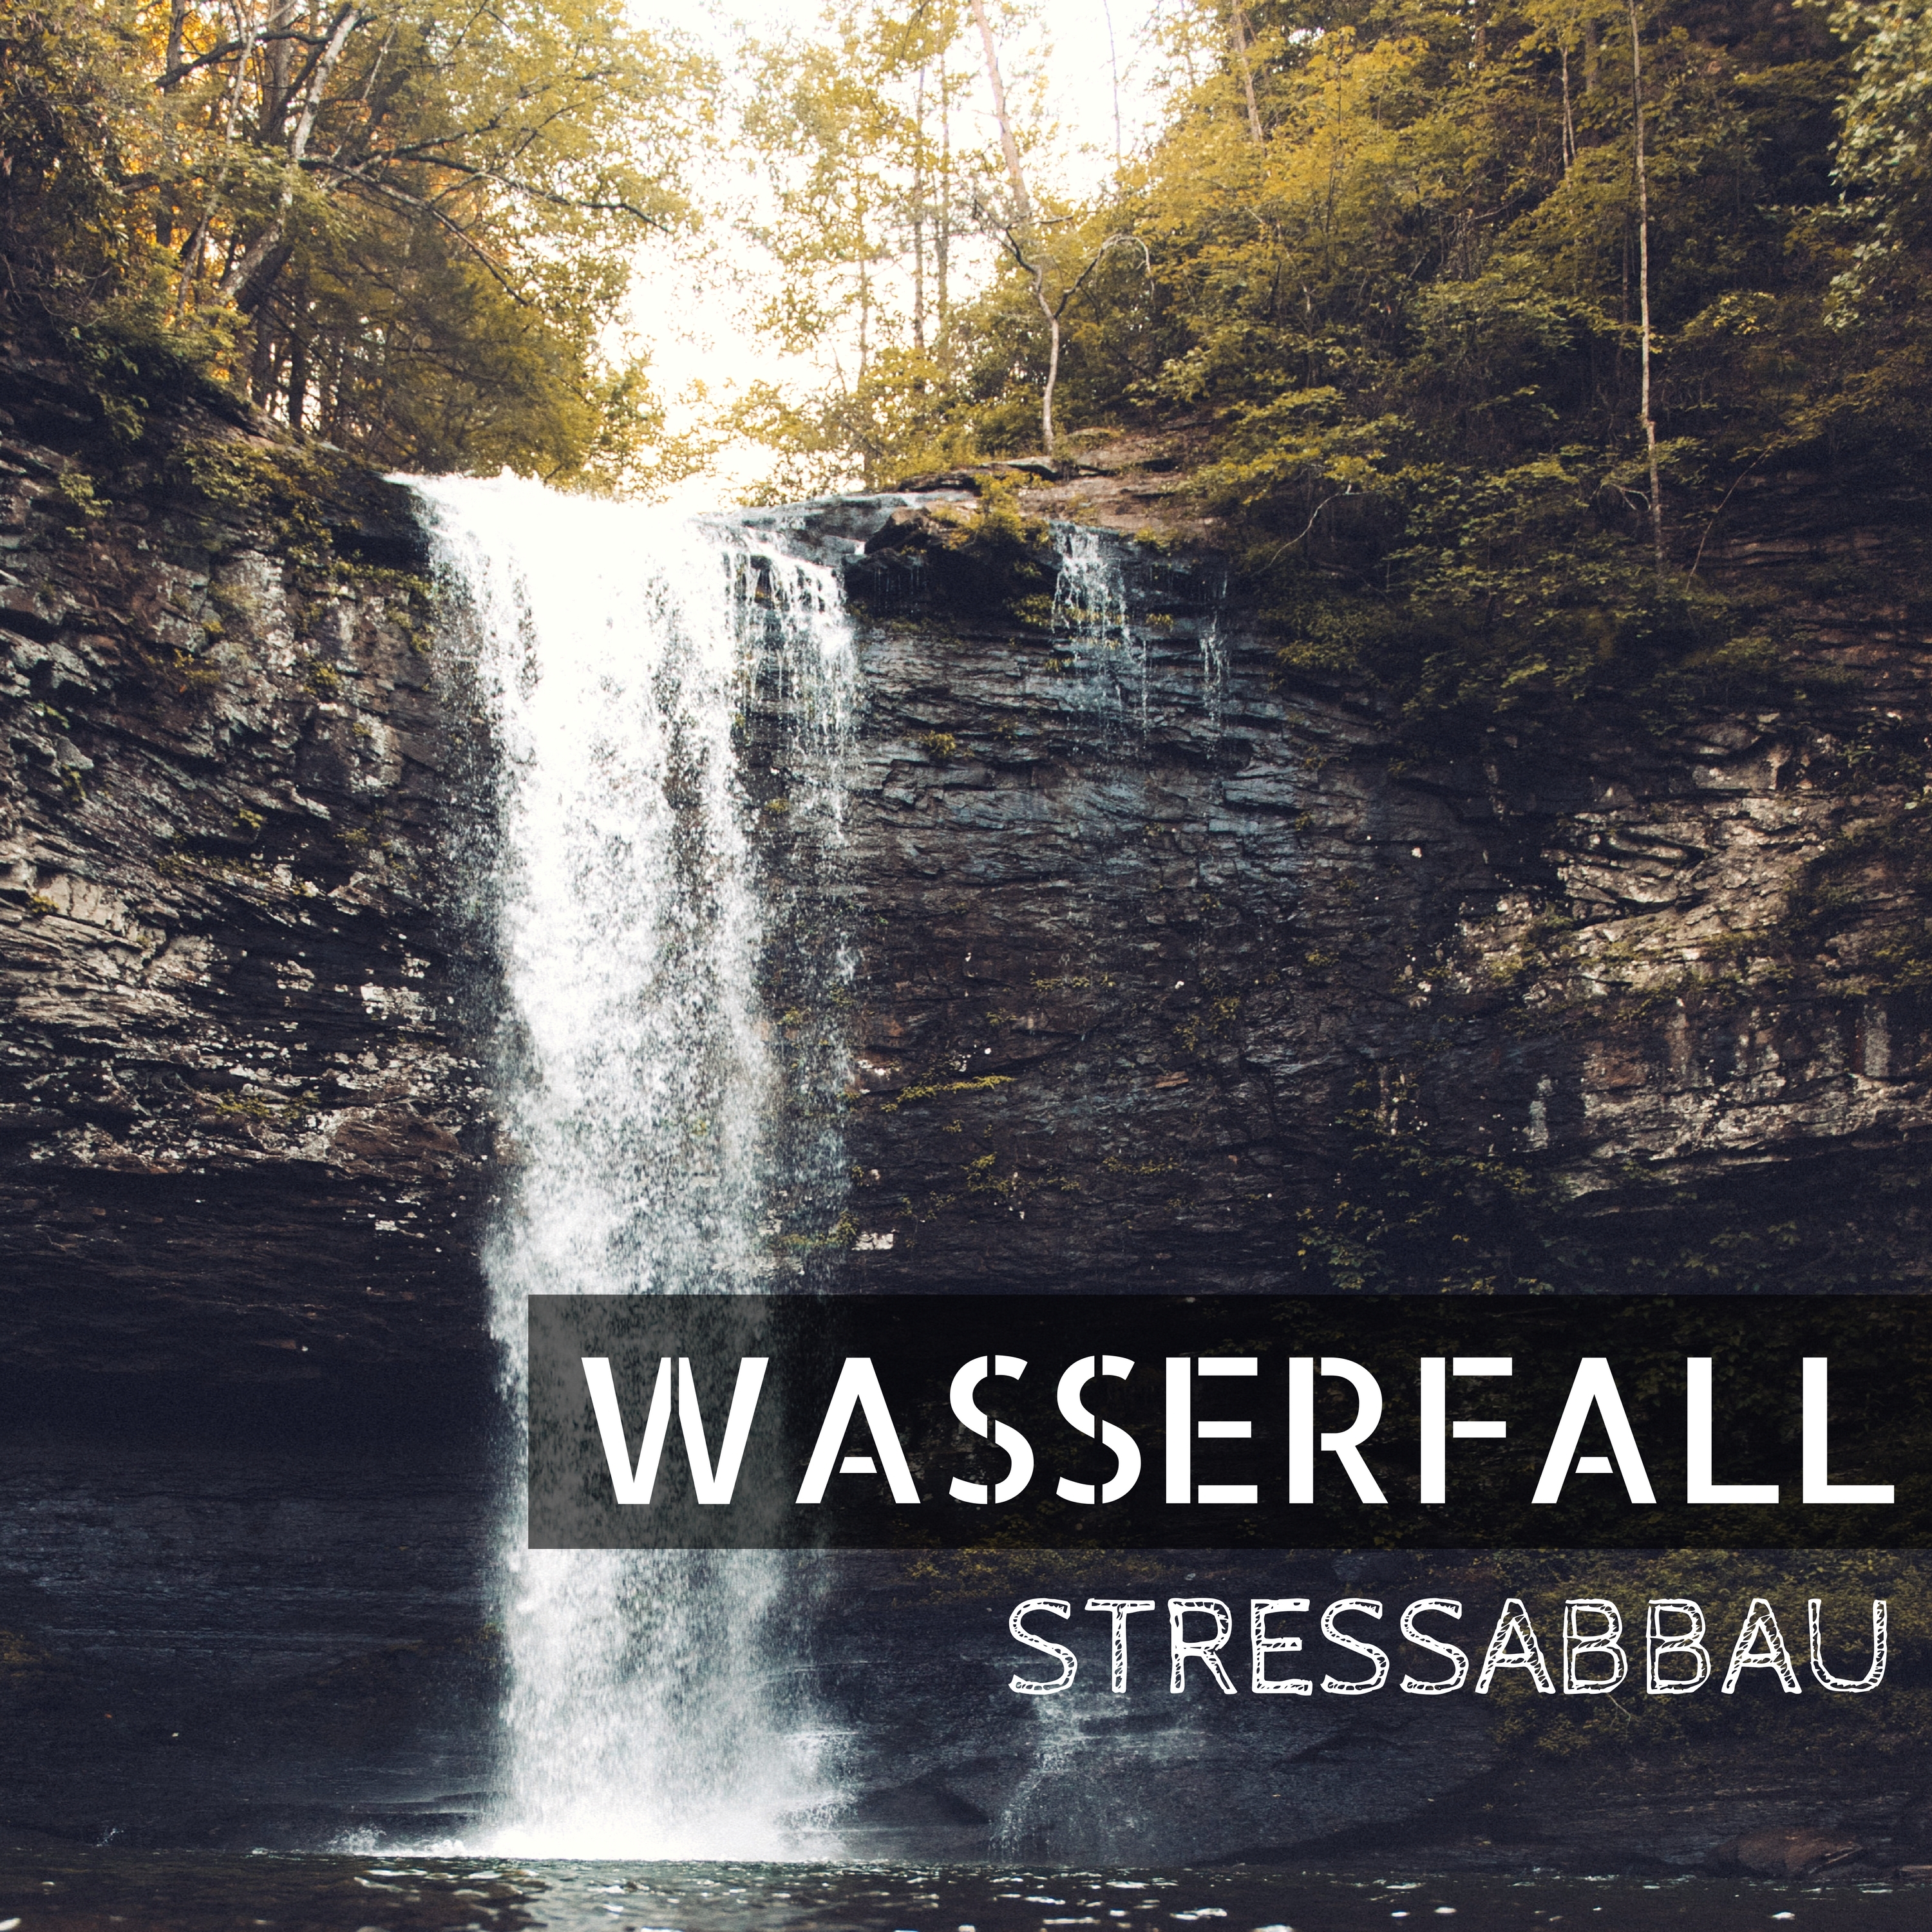 Wasserfall Stressabbau